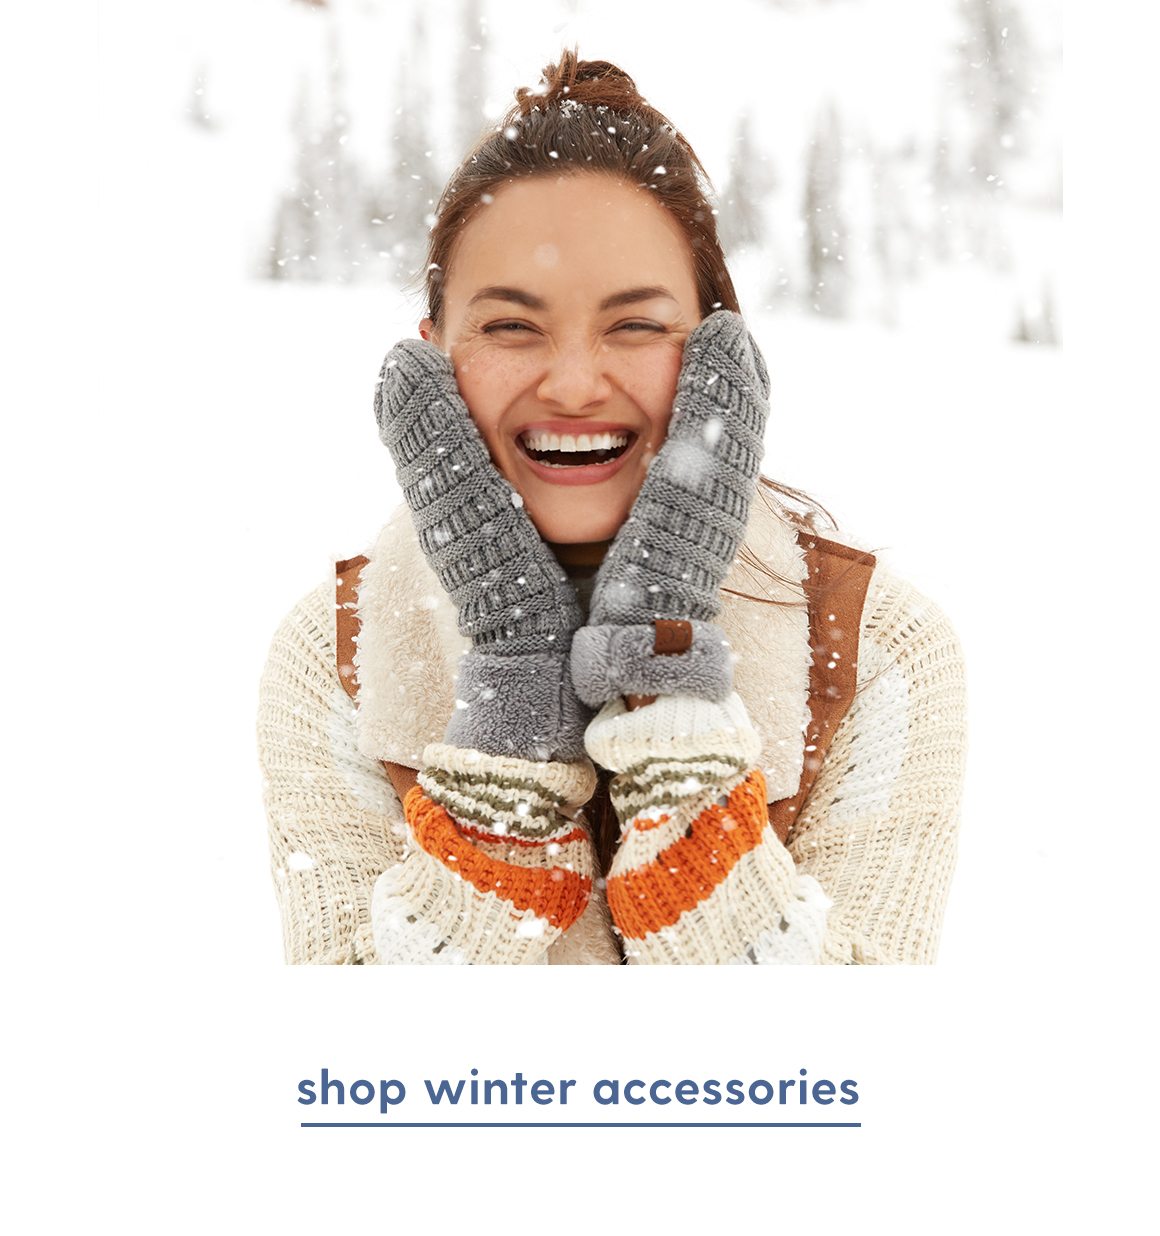 Shop winter accessories.